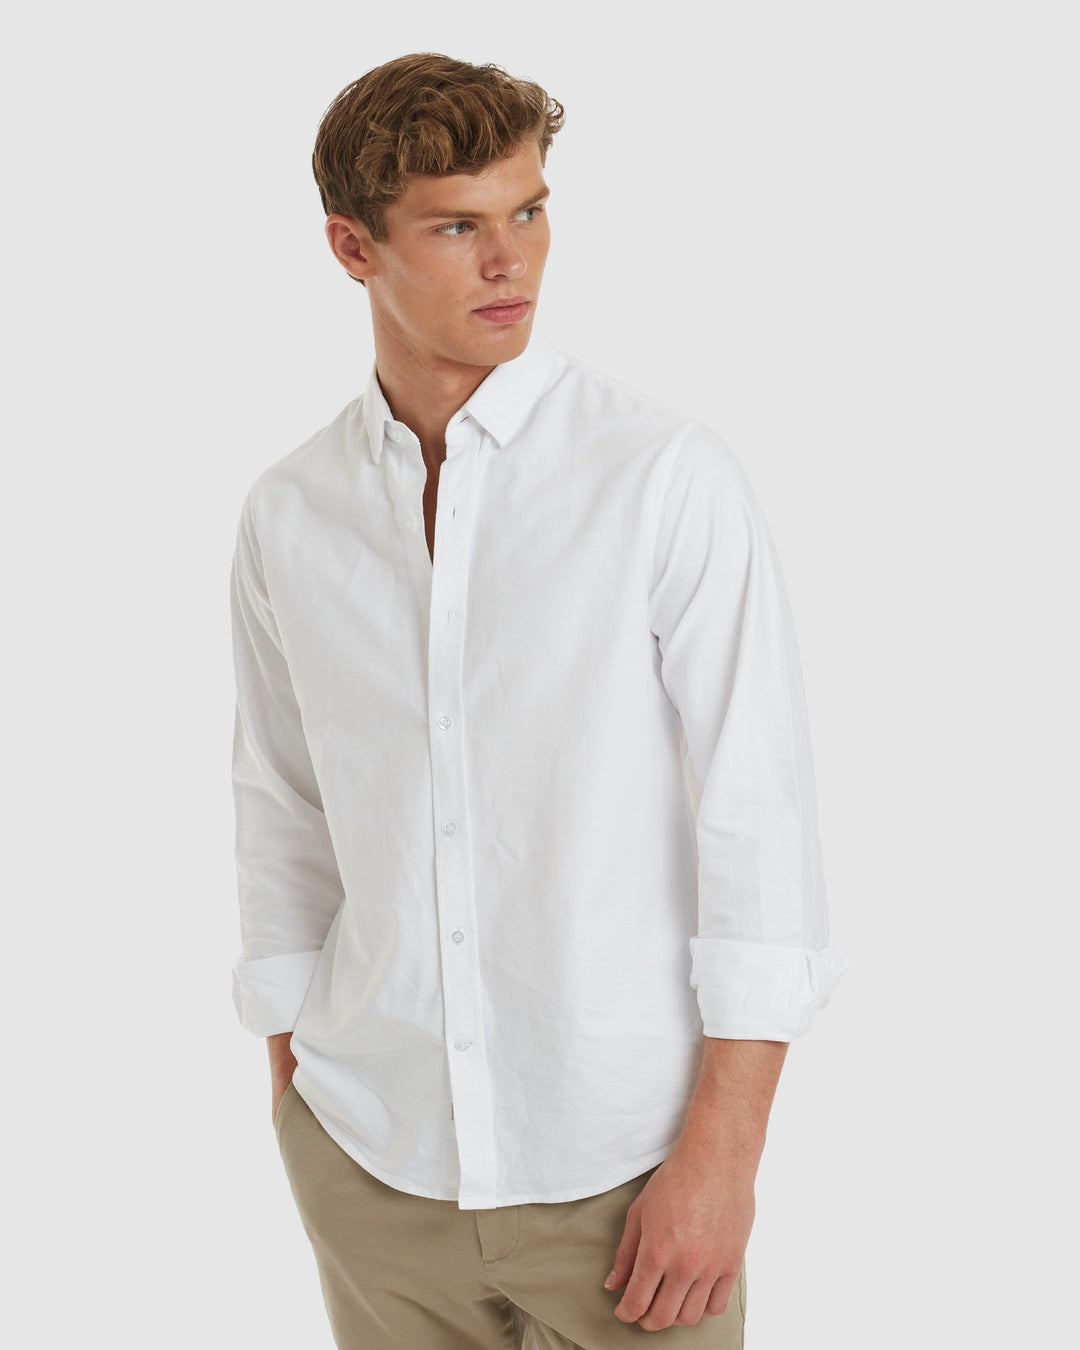 Oxford-Casual White Cotton Shirt